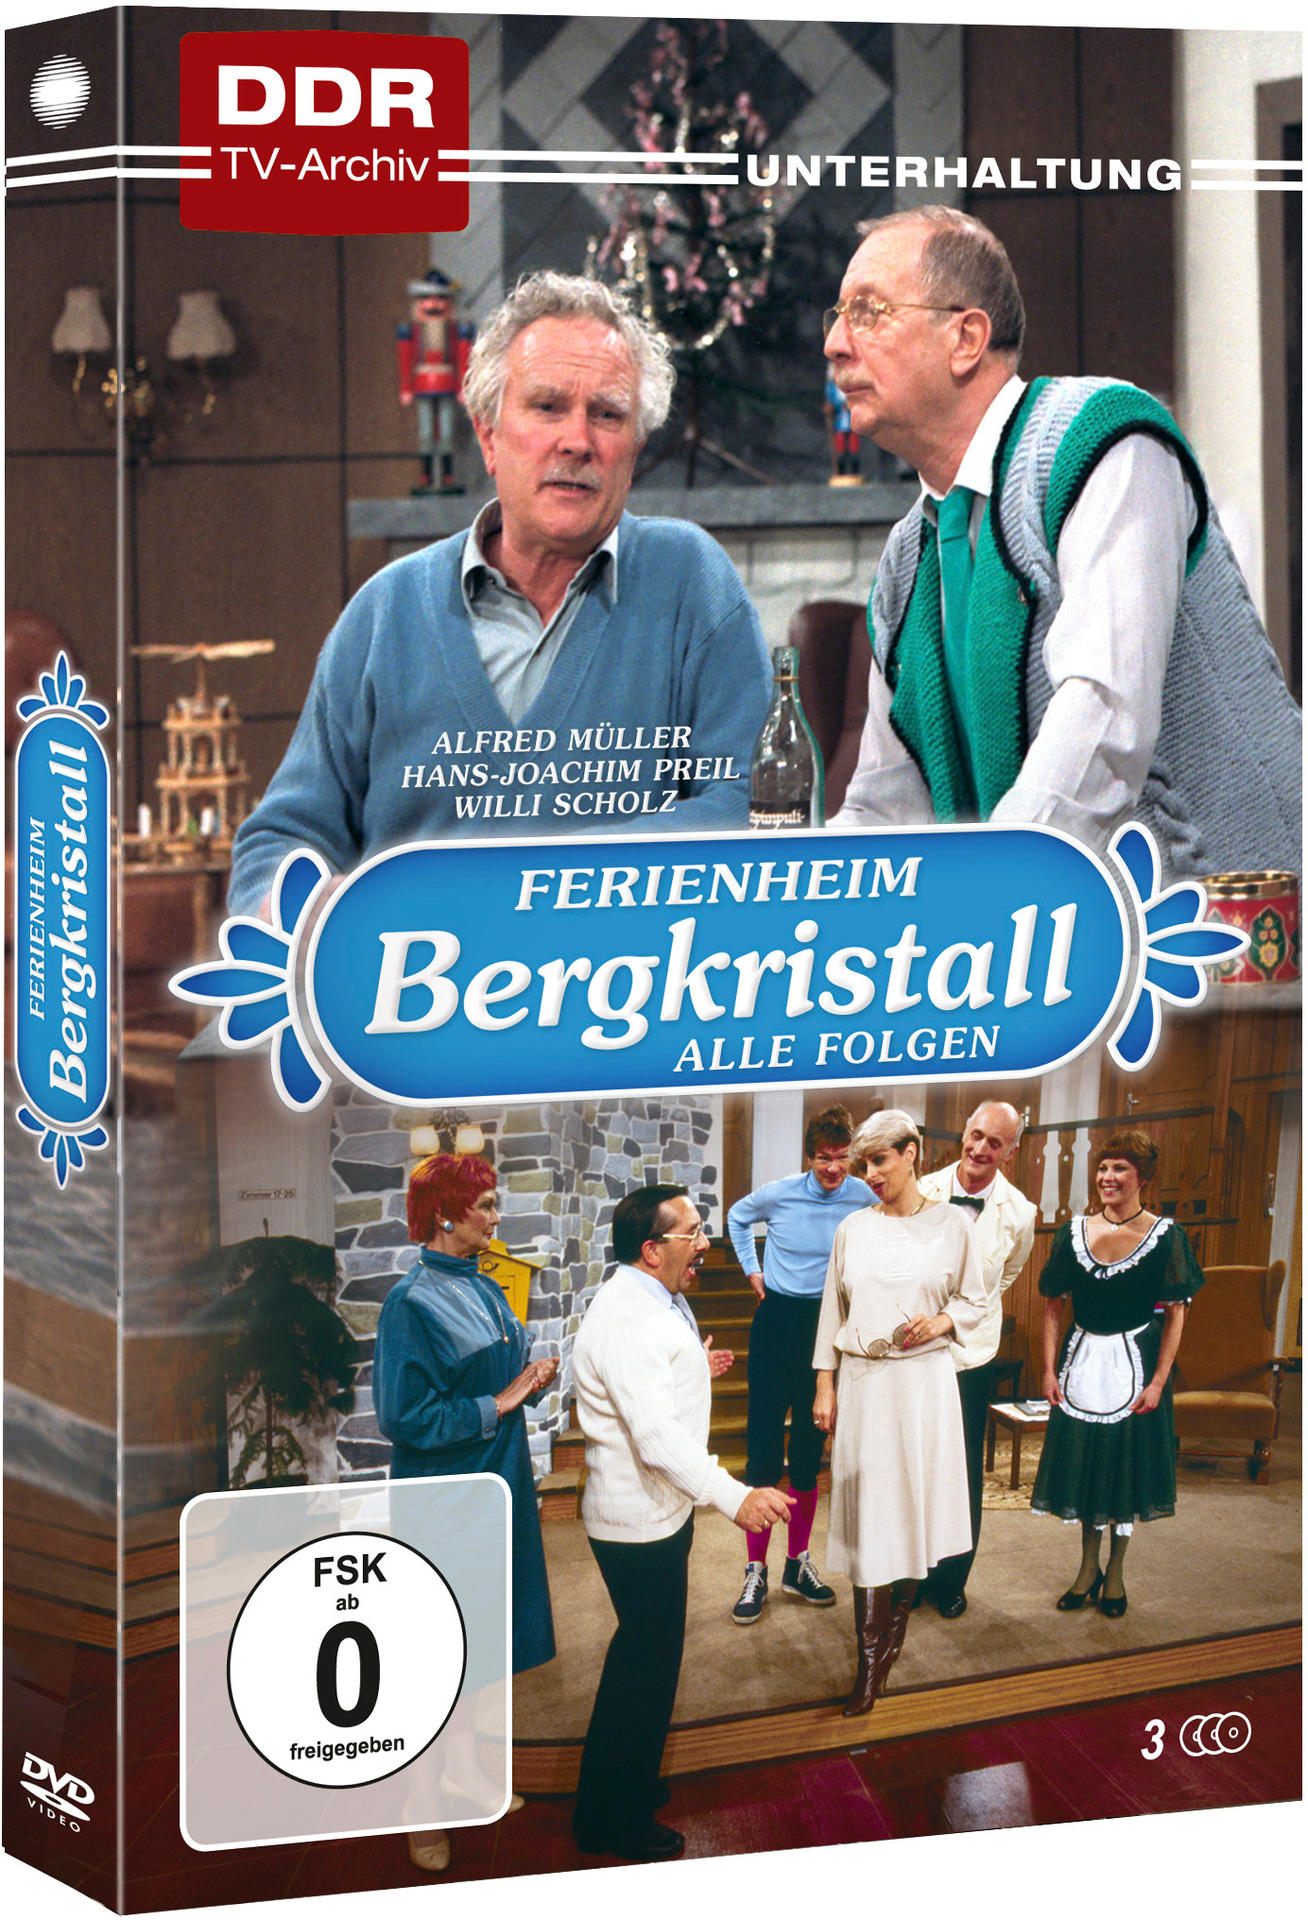 KOMPLETTE BERGKRISTALL DVD FERIENHEIM DIE SERIE -